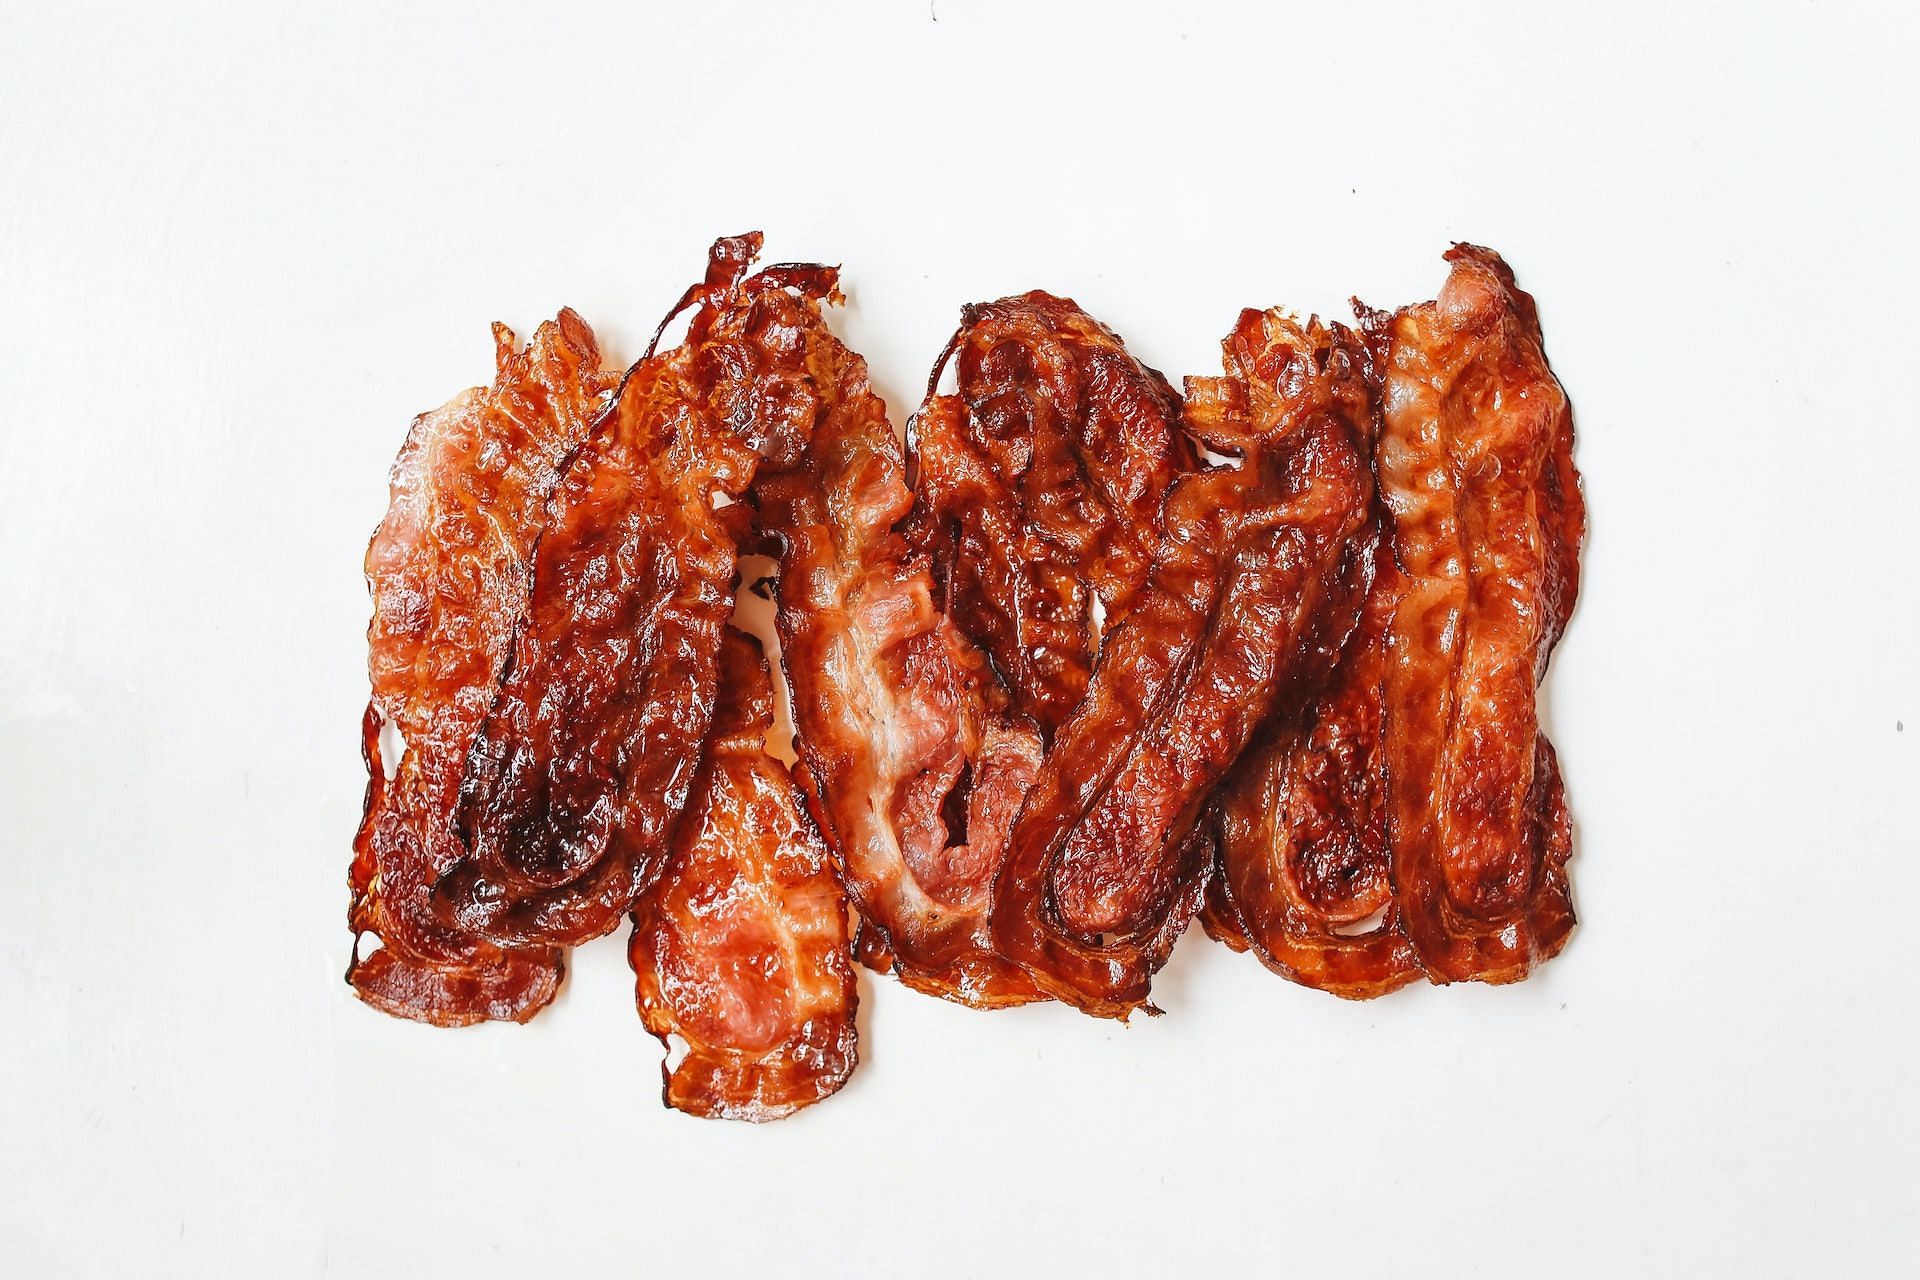 Bacon is a processed pork meat. (Photo via Pexels/Polina Tankilevitch)